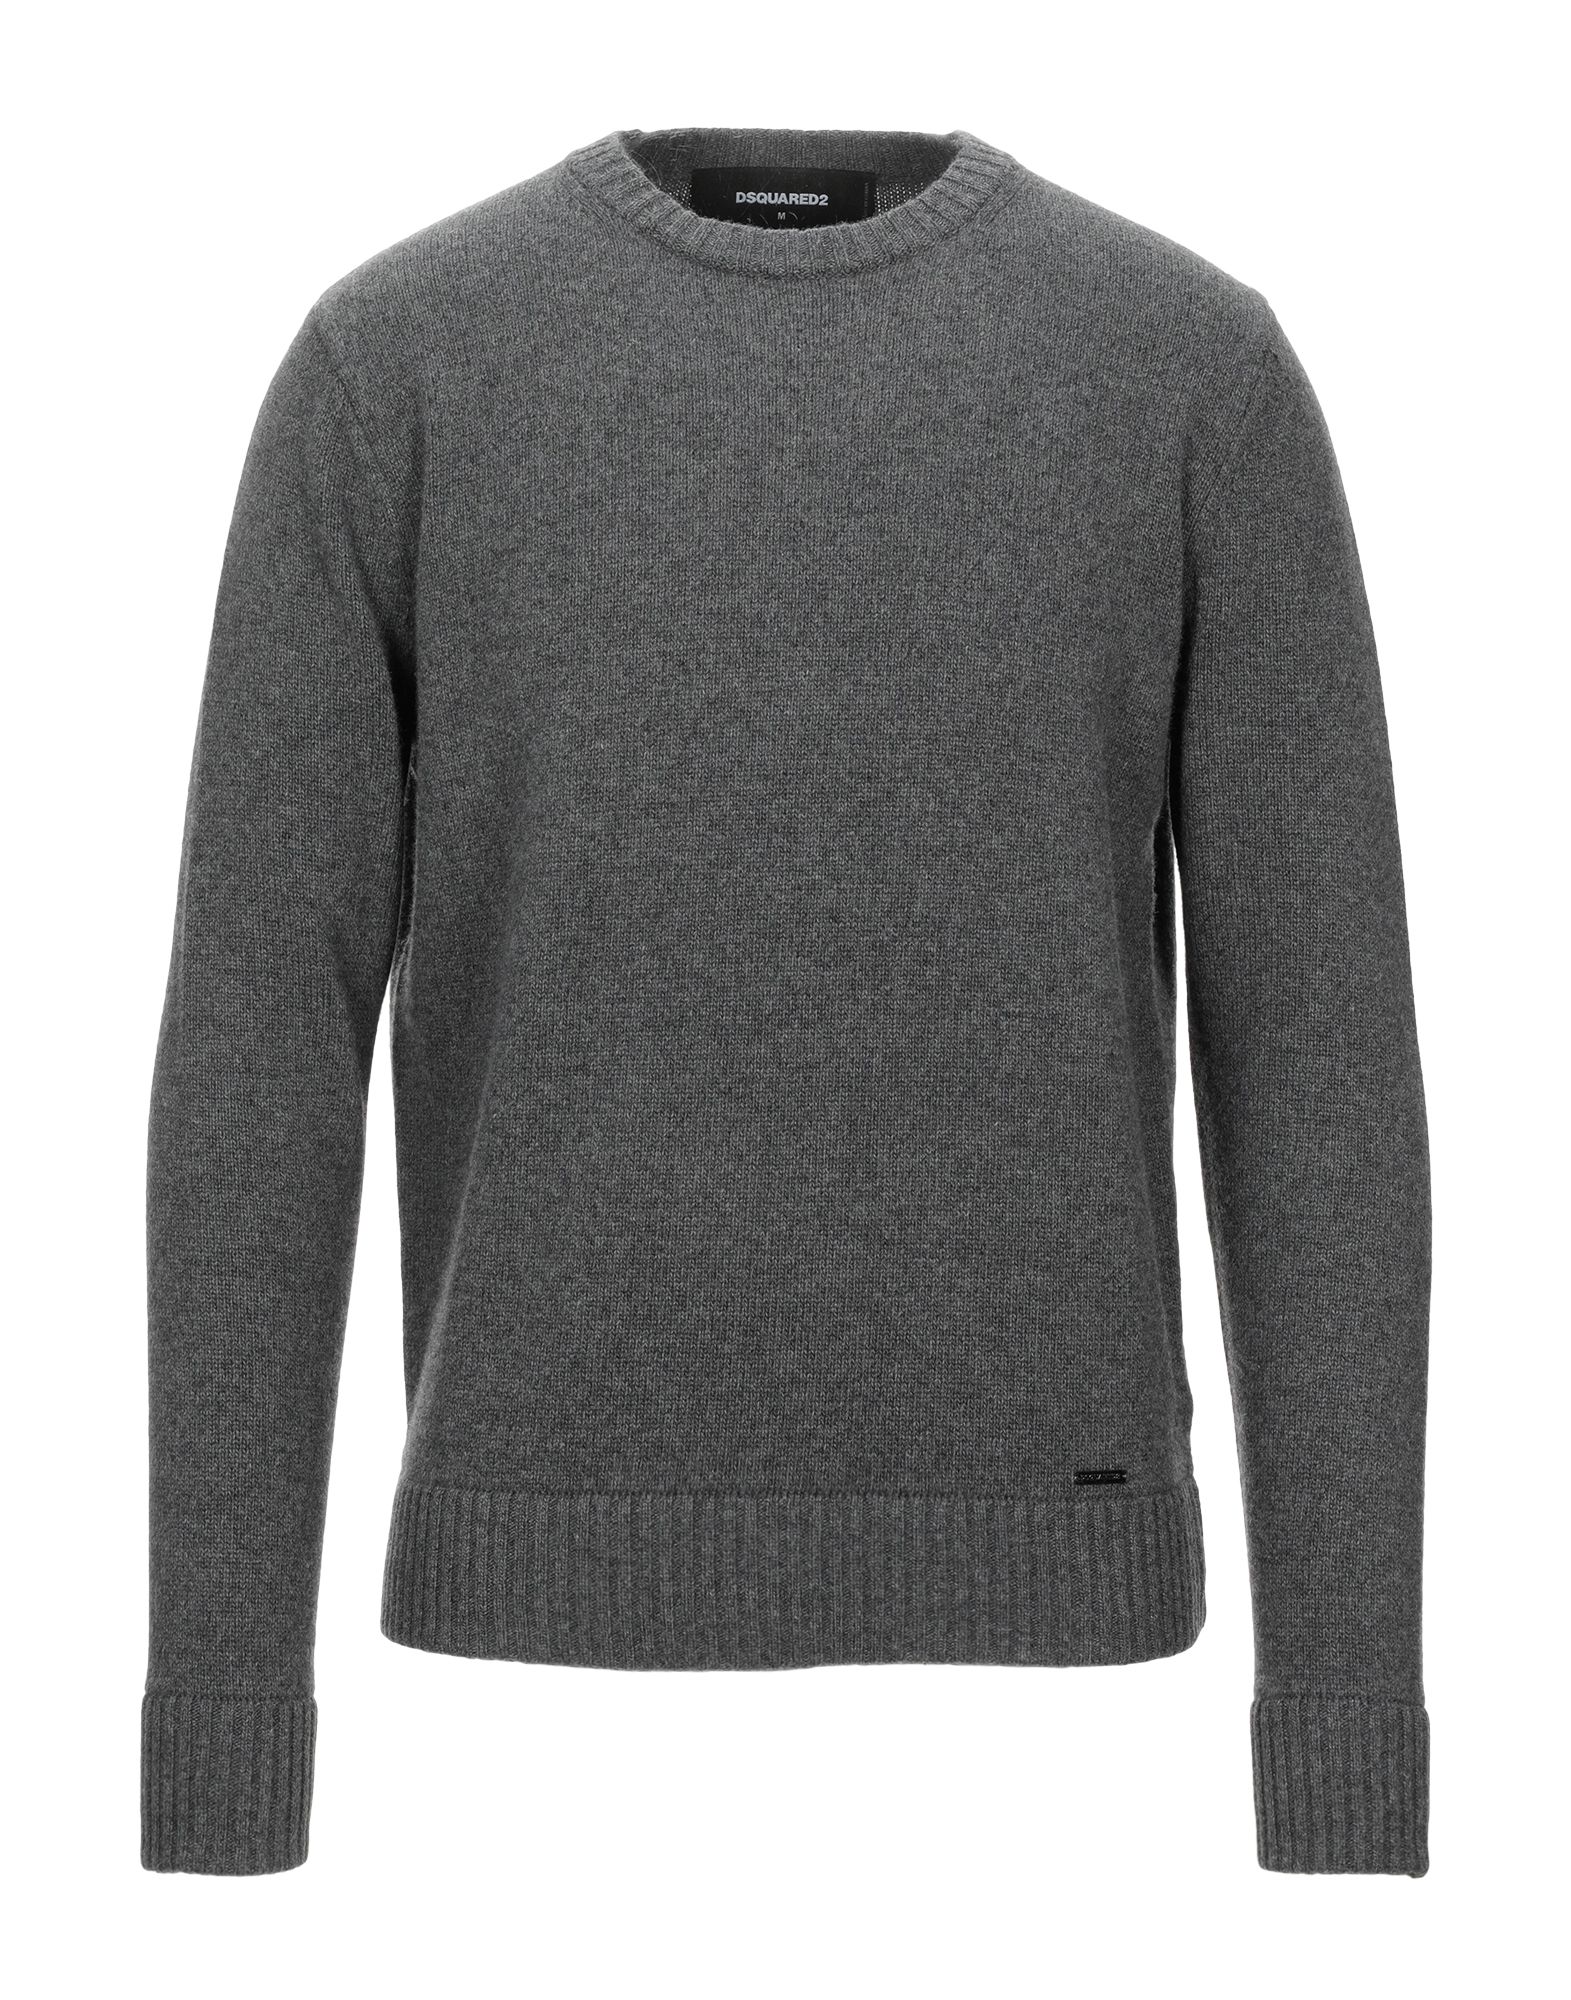 DSQUARED2 Sweaters - Item 14042661